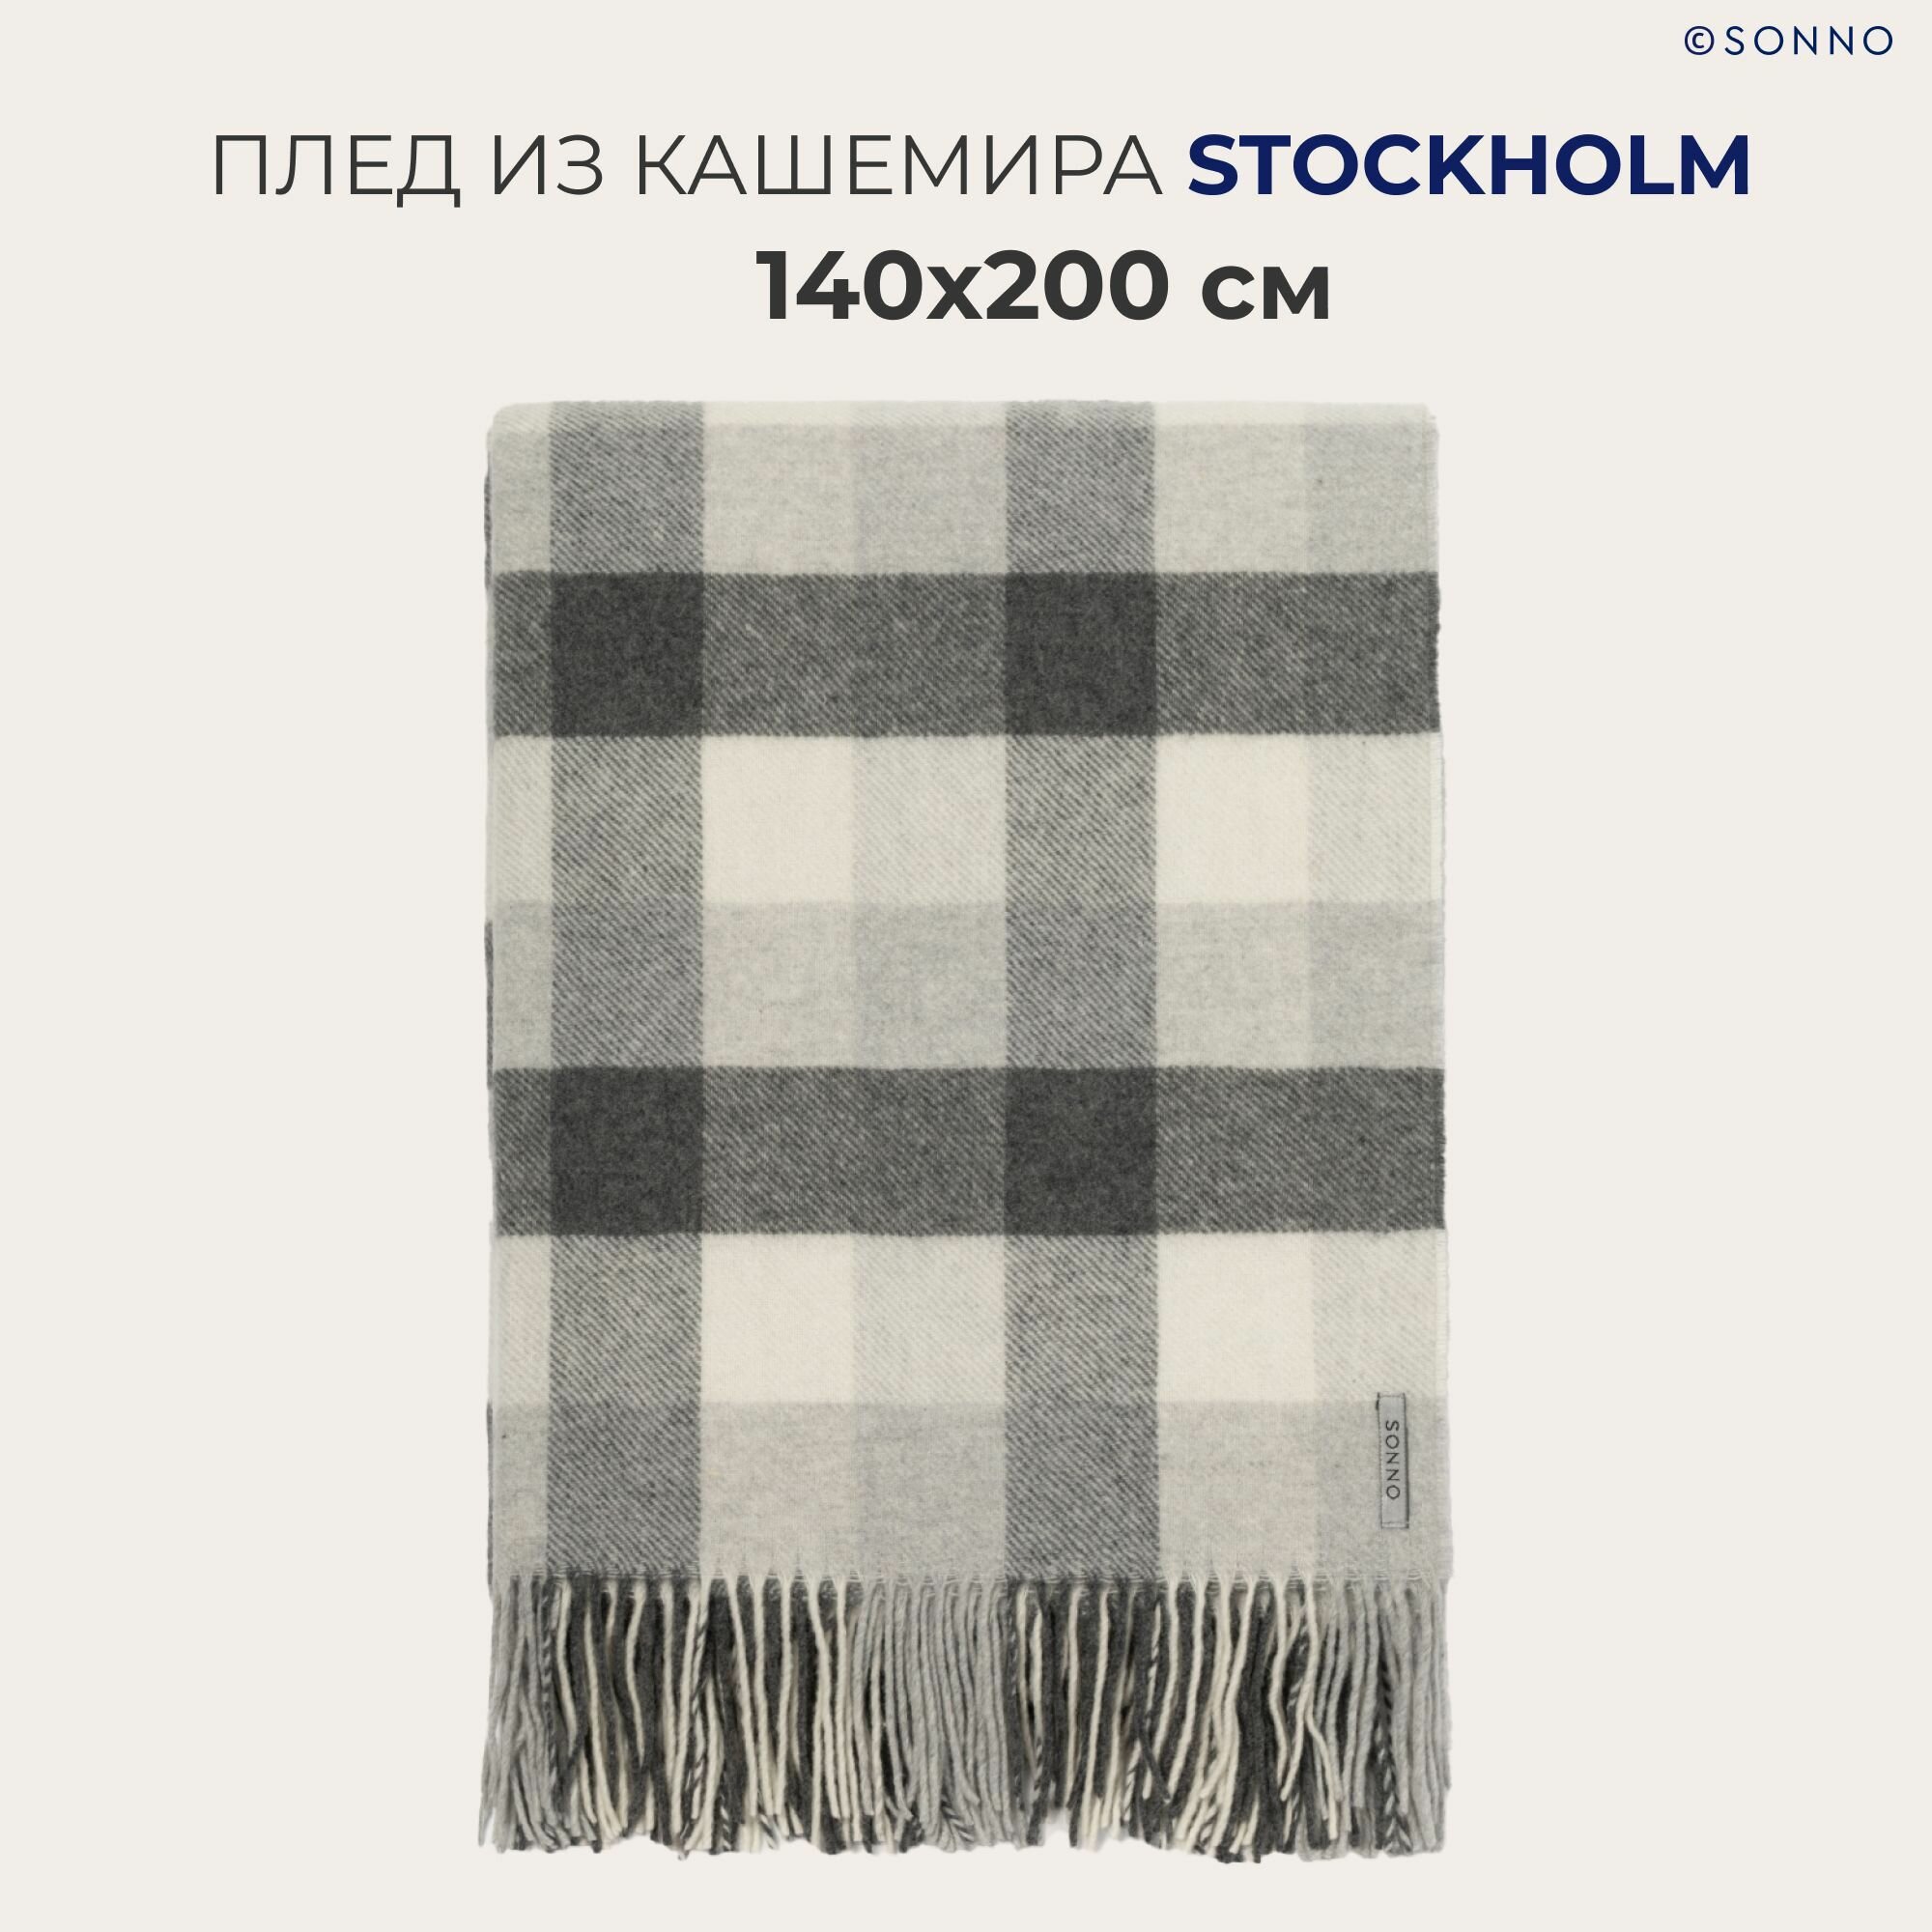 Плед SONNO STOCKHOLM 140х200 см цвет Светло-серый. Крупная клетка, Кашемир, Шерсть, 245 гр/кв. м